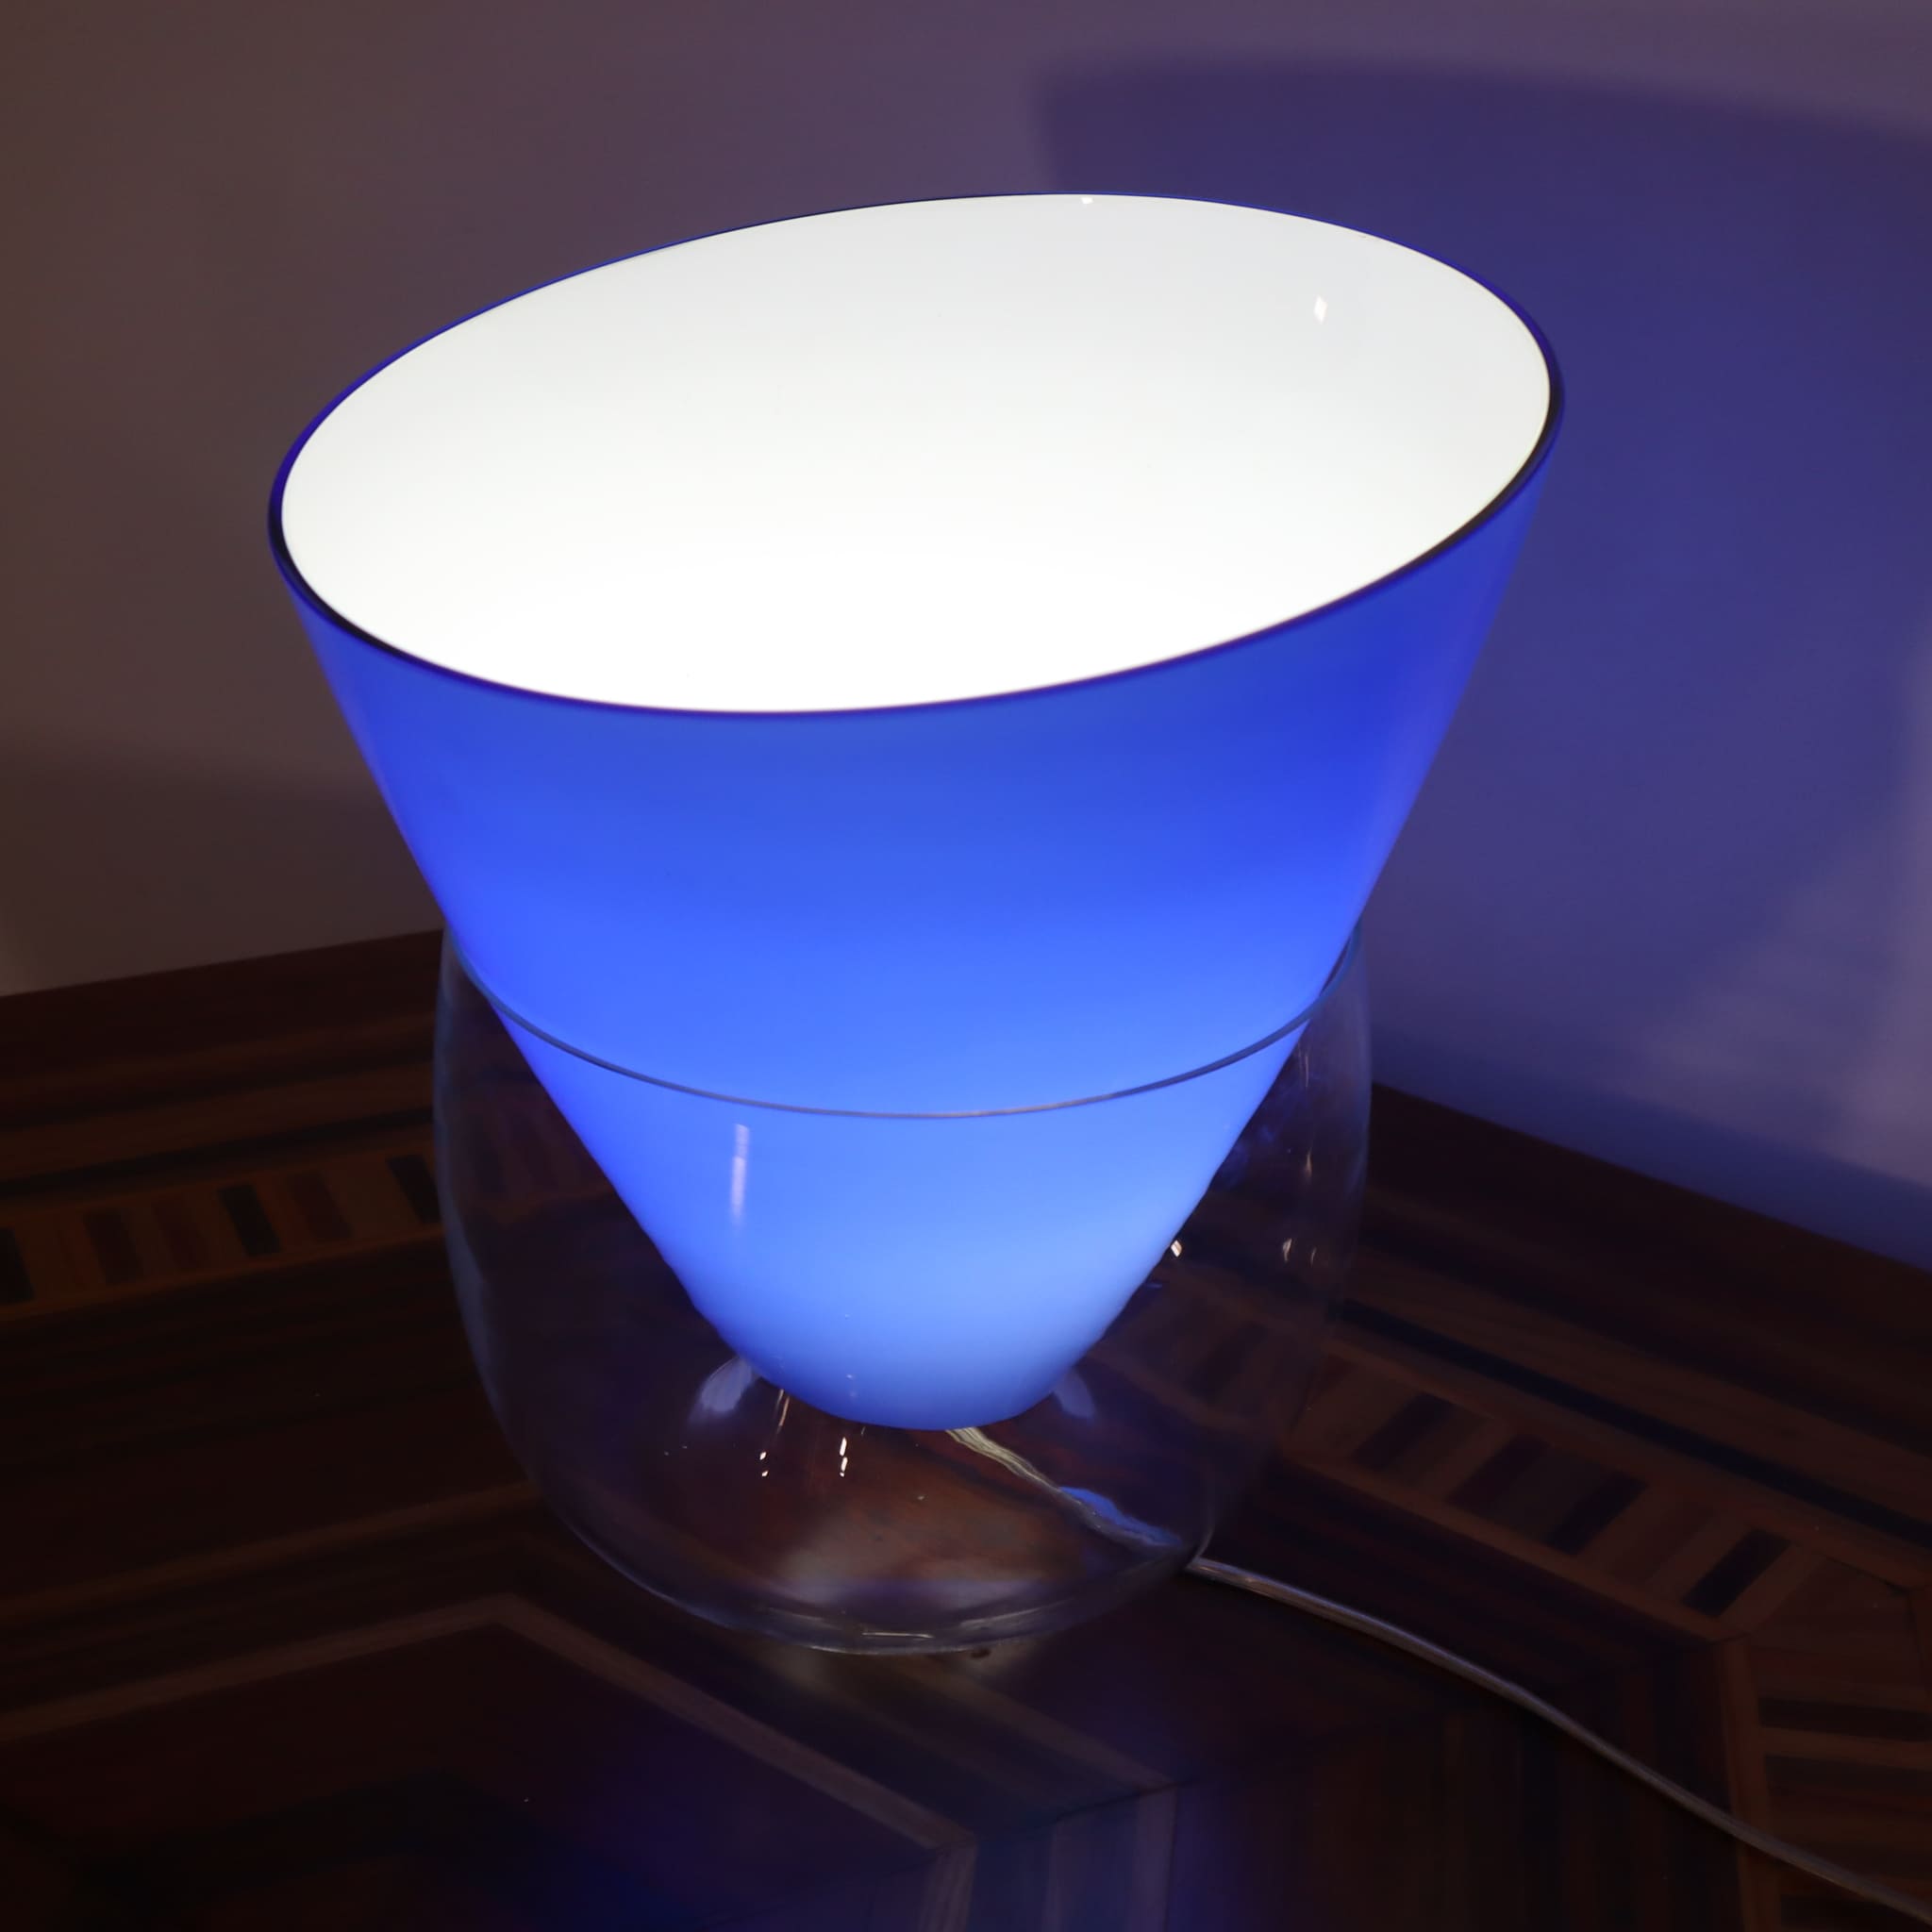 visionidepoca-visions-depoca-tocada-lamurrina-table-lamp-blue-glass-vintage-design-modern-antiques-furniture-made-italy-3